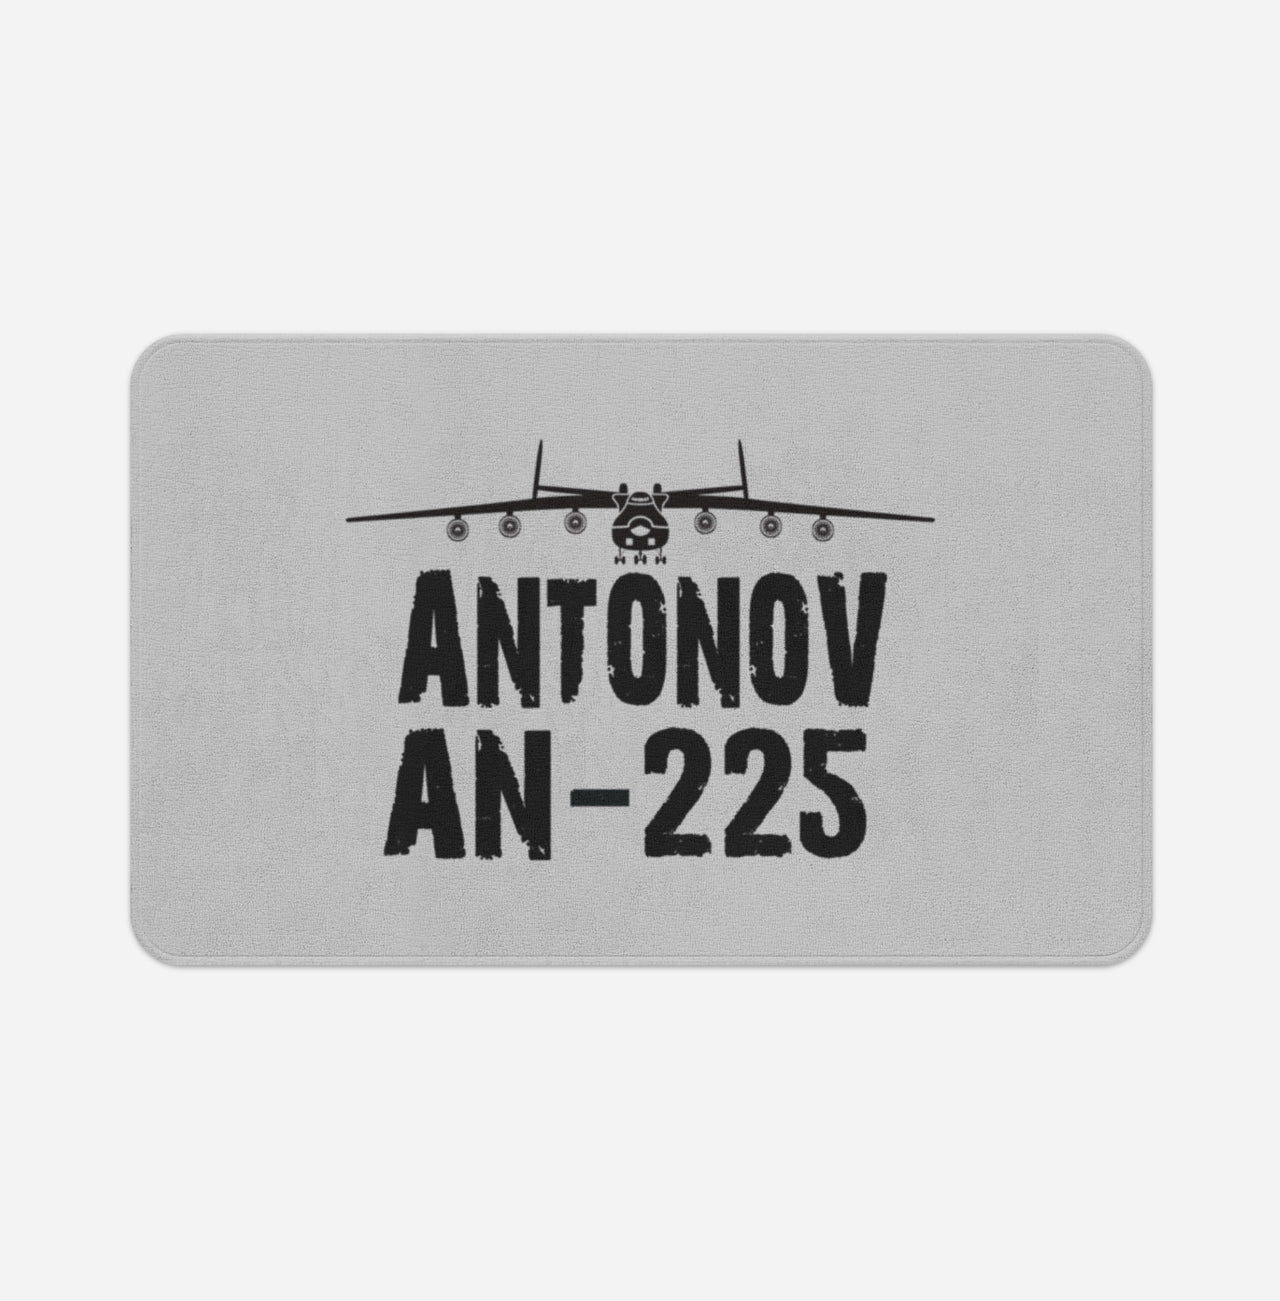 Antonov AN-225 & Plane Designed Bath Mats